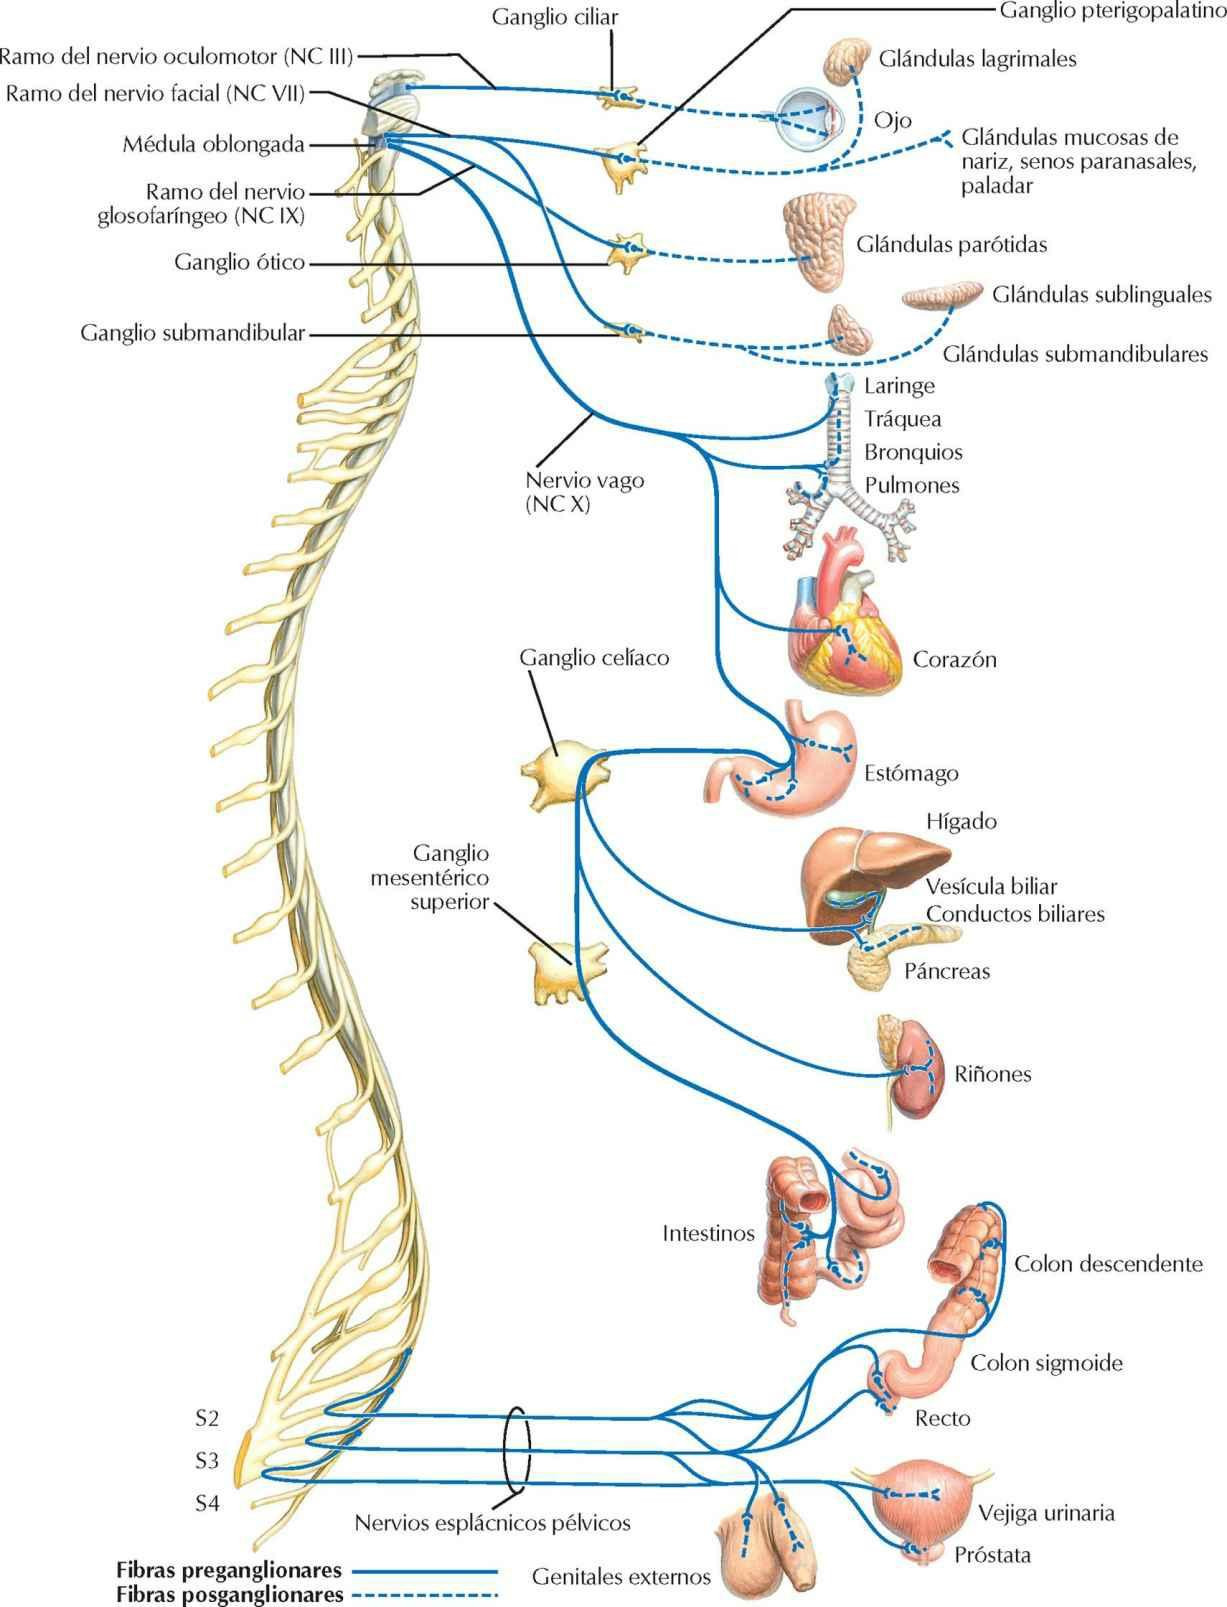 Sistema nervioso parasimpático: esquema